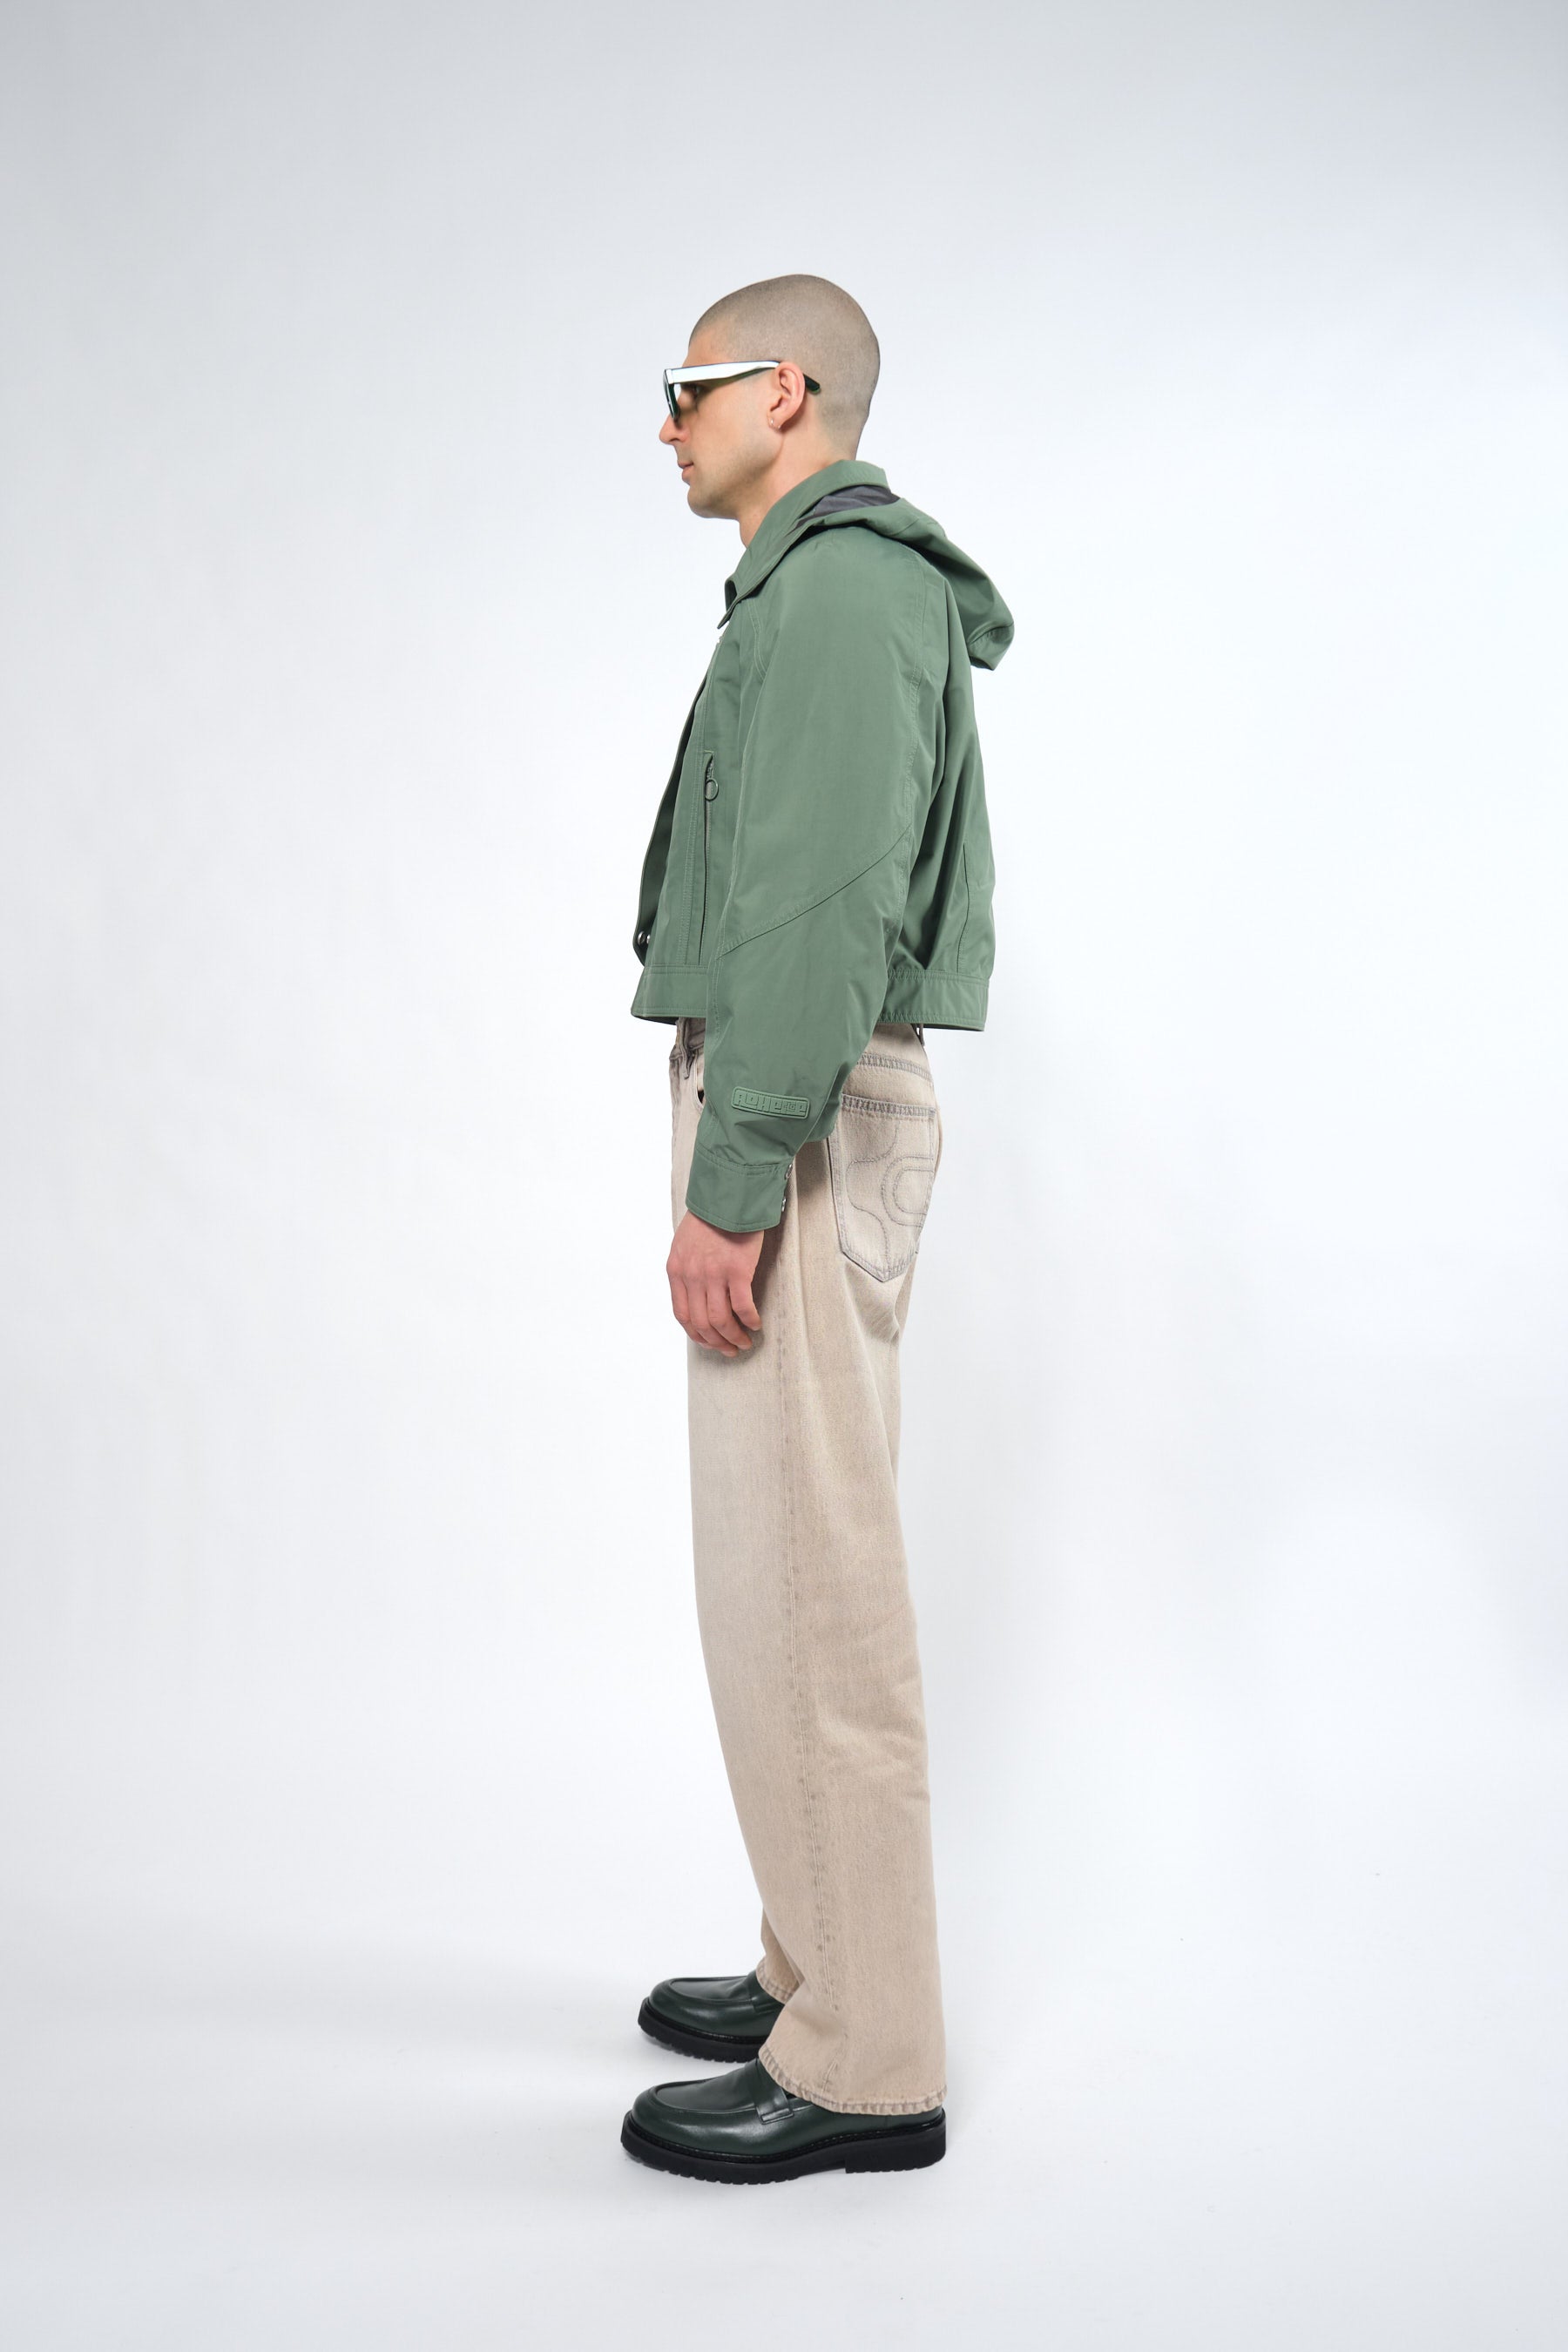  3L Green Waterproof Crop Rain Jacket with Hood - Adhere To  - 5